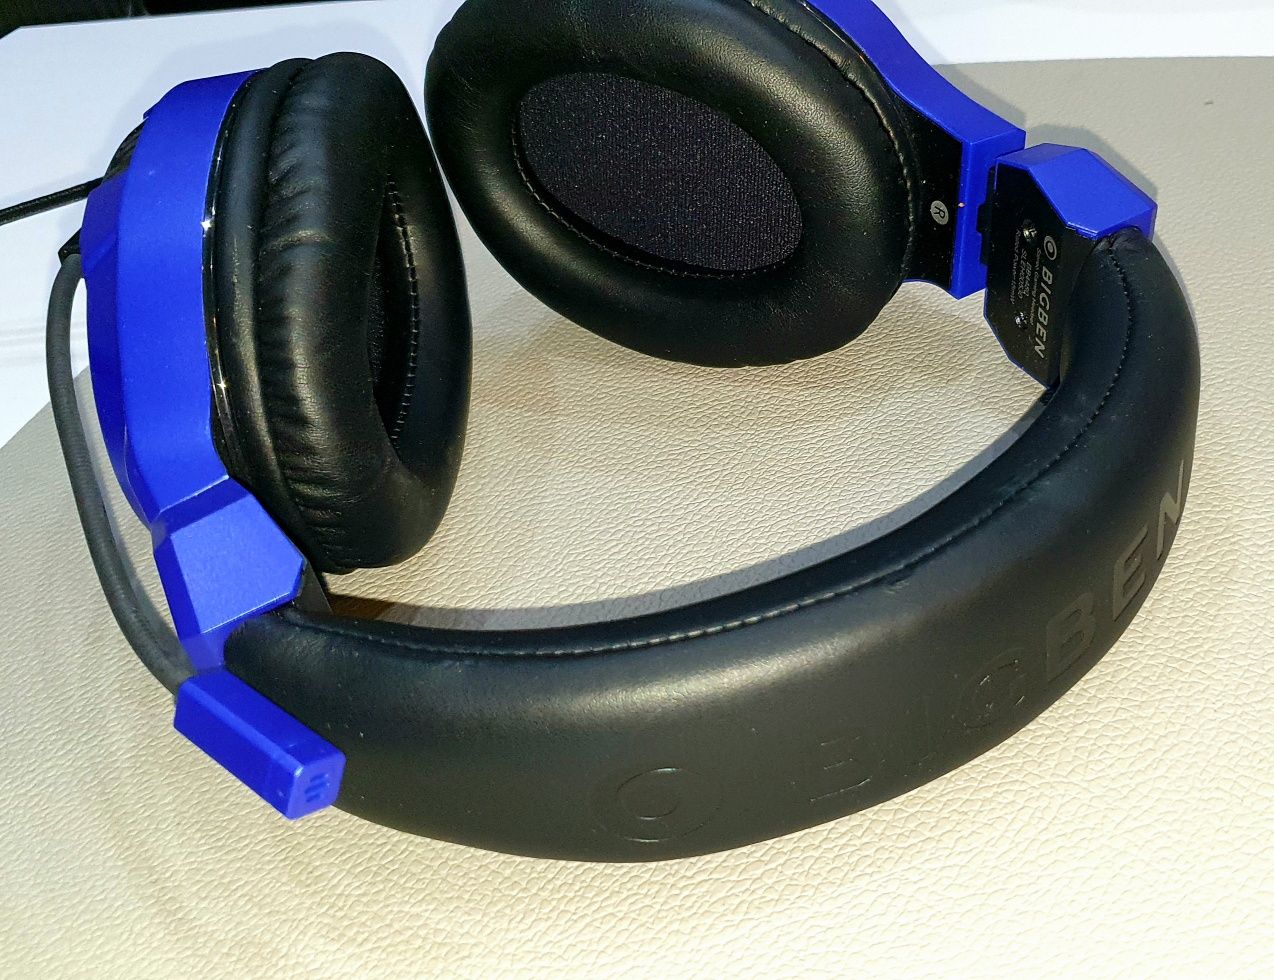 Słuchawki BigBen blue PS4 polecam